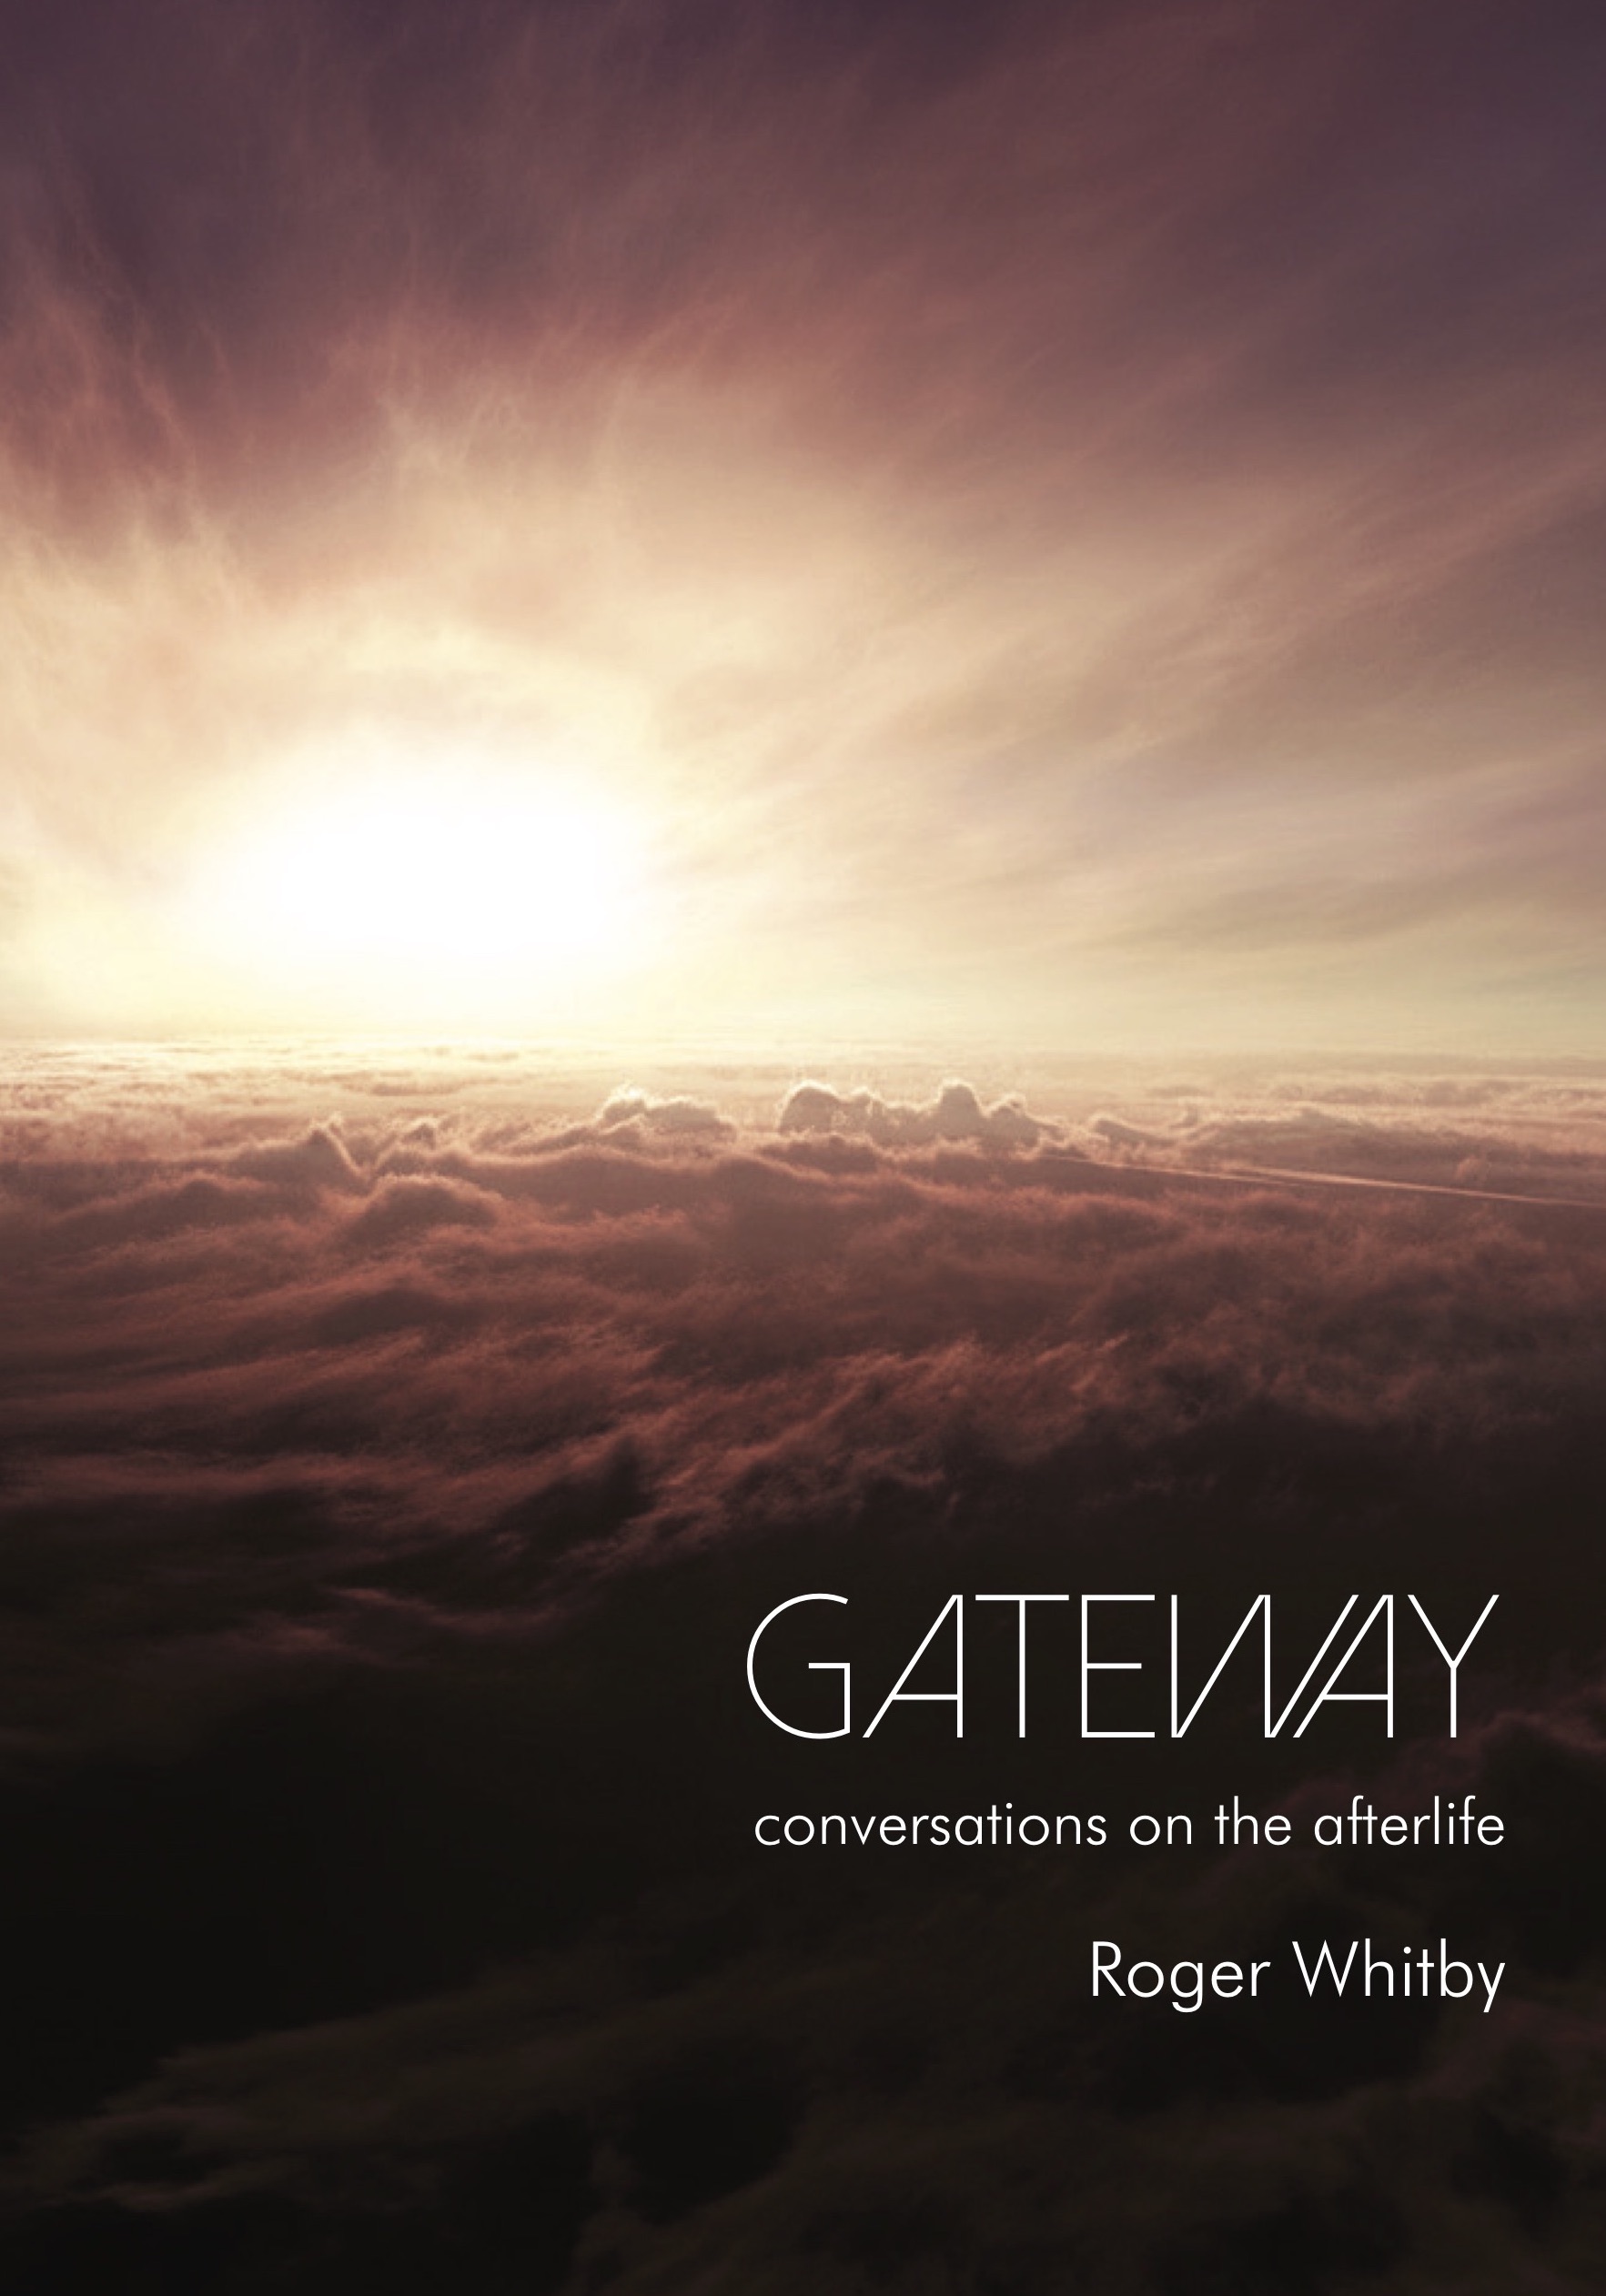 100-gateway-cover-copy.jpg